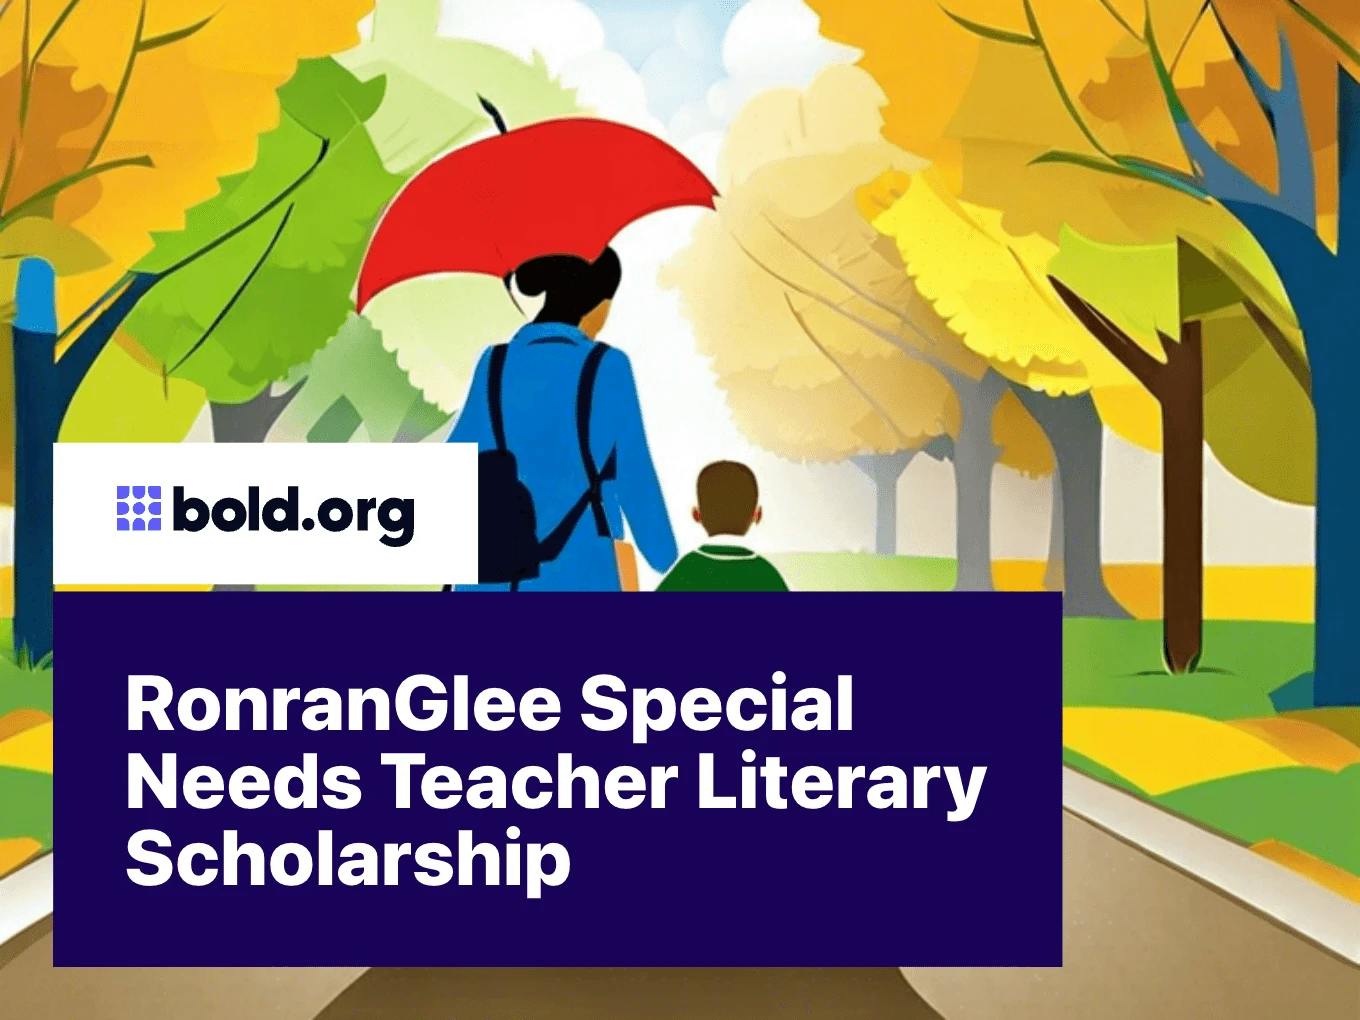 RonranGlee Special Needs Teacher Literary Scholarship